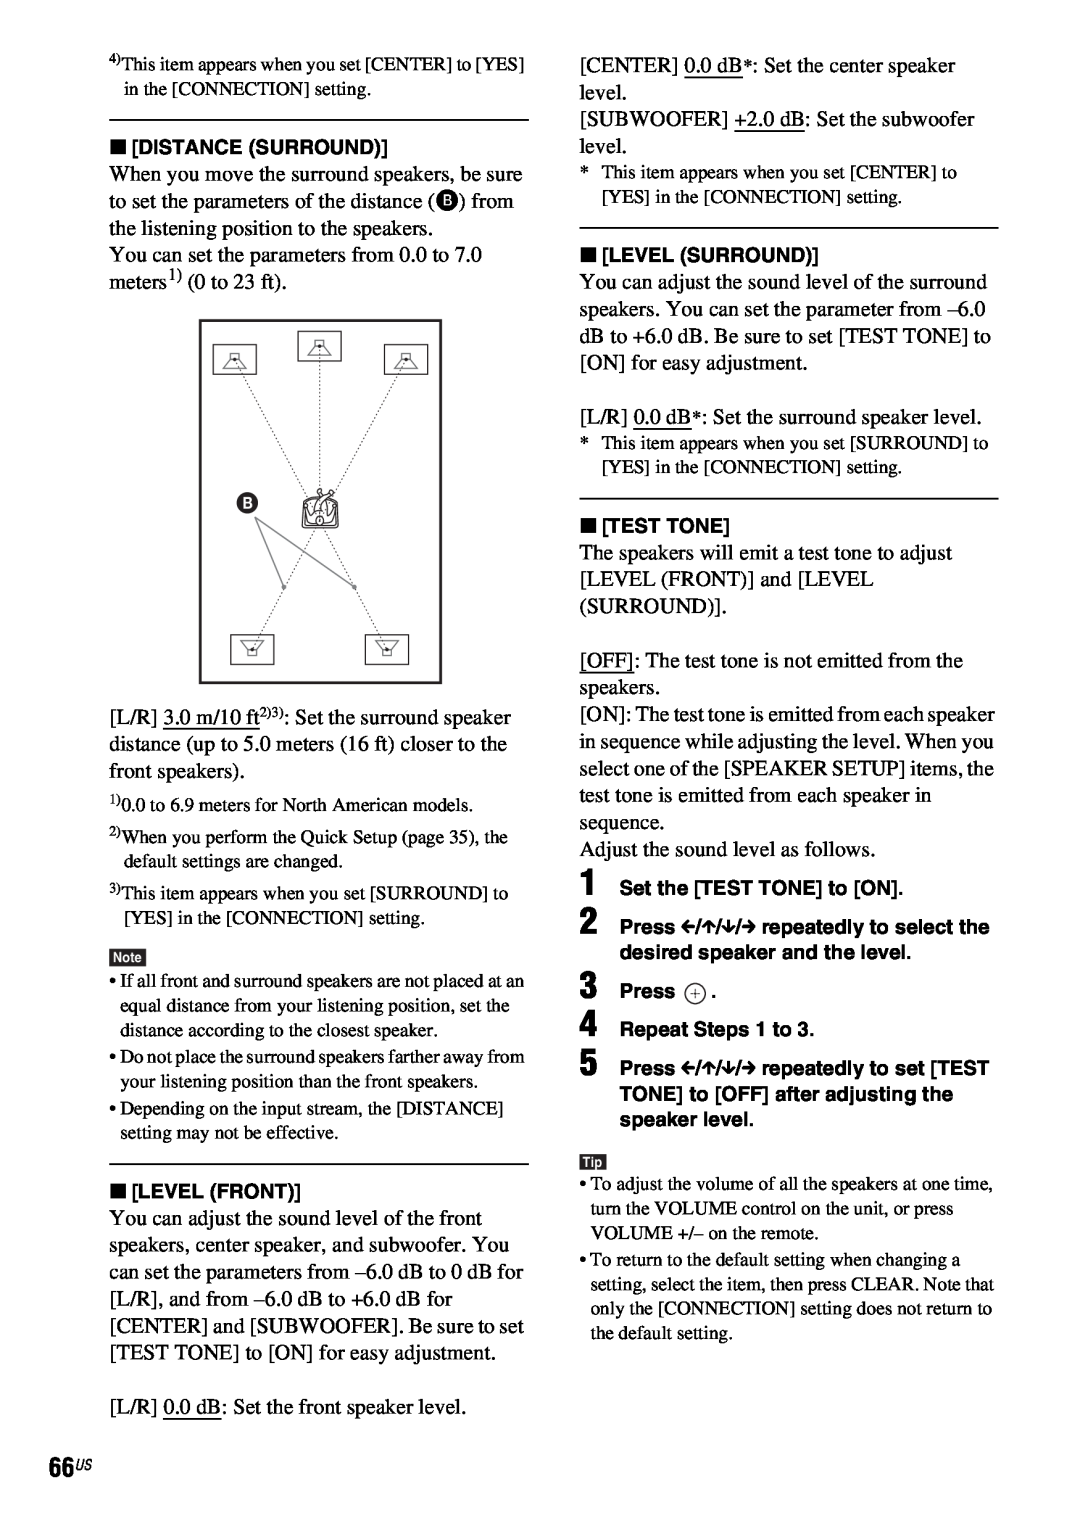 Sony DAV-HDX686W manual xDISTANCE SURROUND, xLEVEL FRONT, xLEVEL SURROUND, xTEST TONE, Press 4 Repeat Steps 1 to 